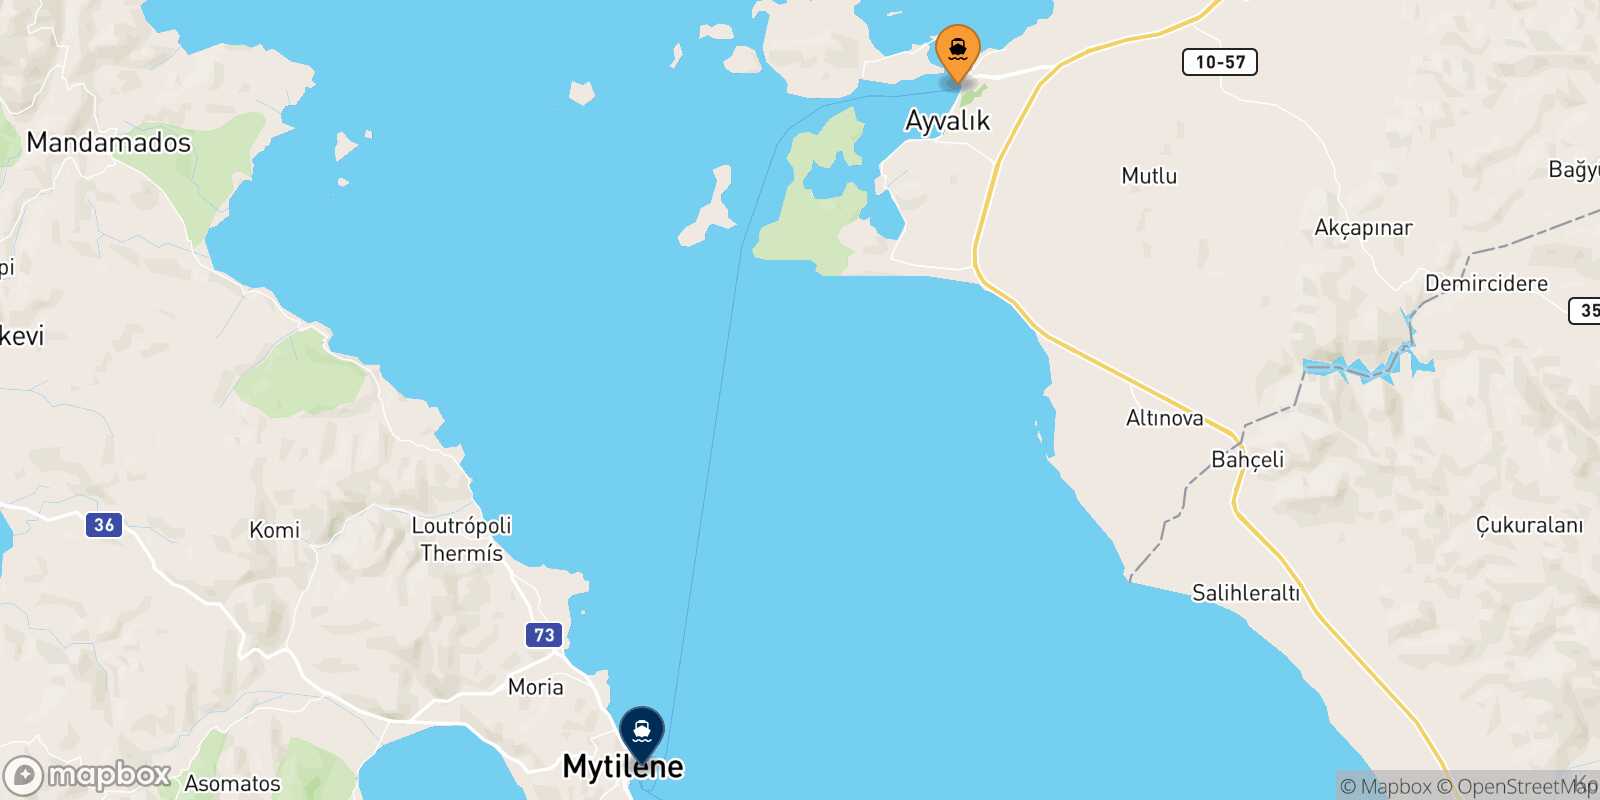 Mapa de la ruta Ayvalik Mytilene (Lesvos)